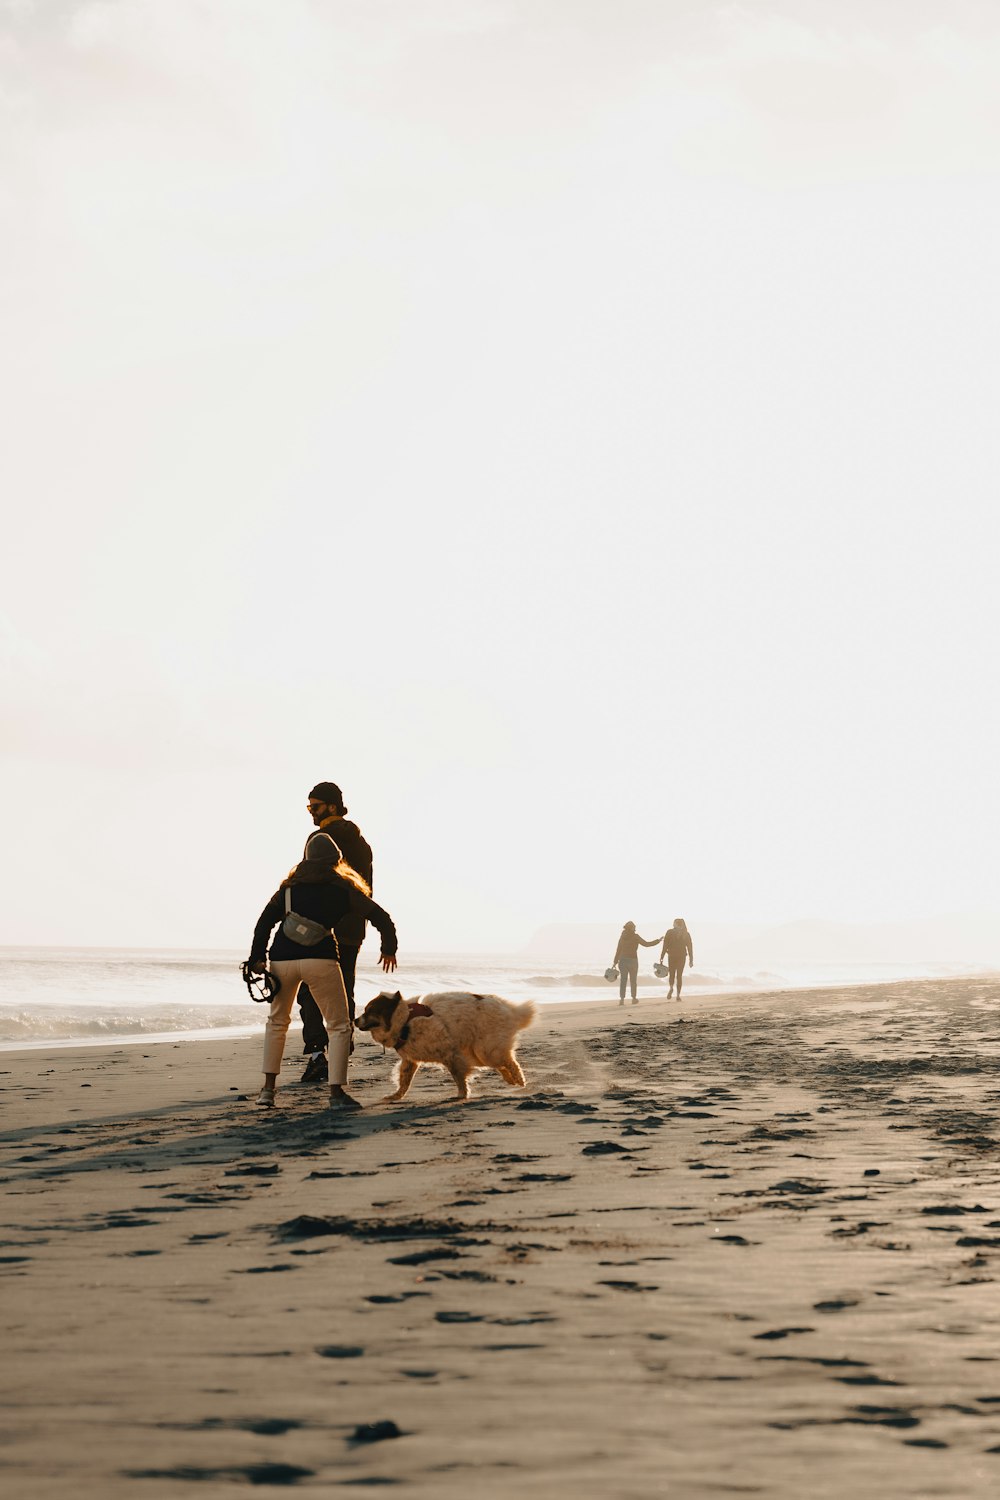 a person walking a dog on a beach